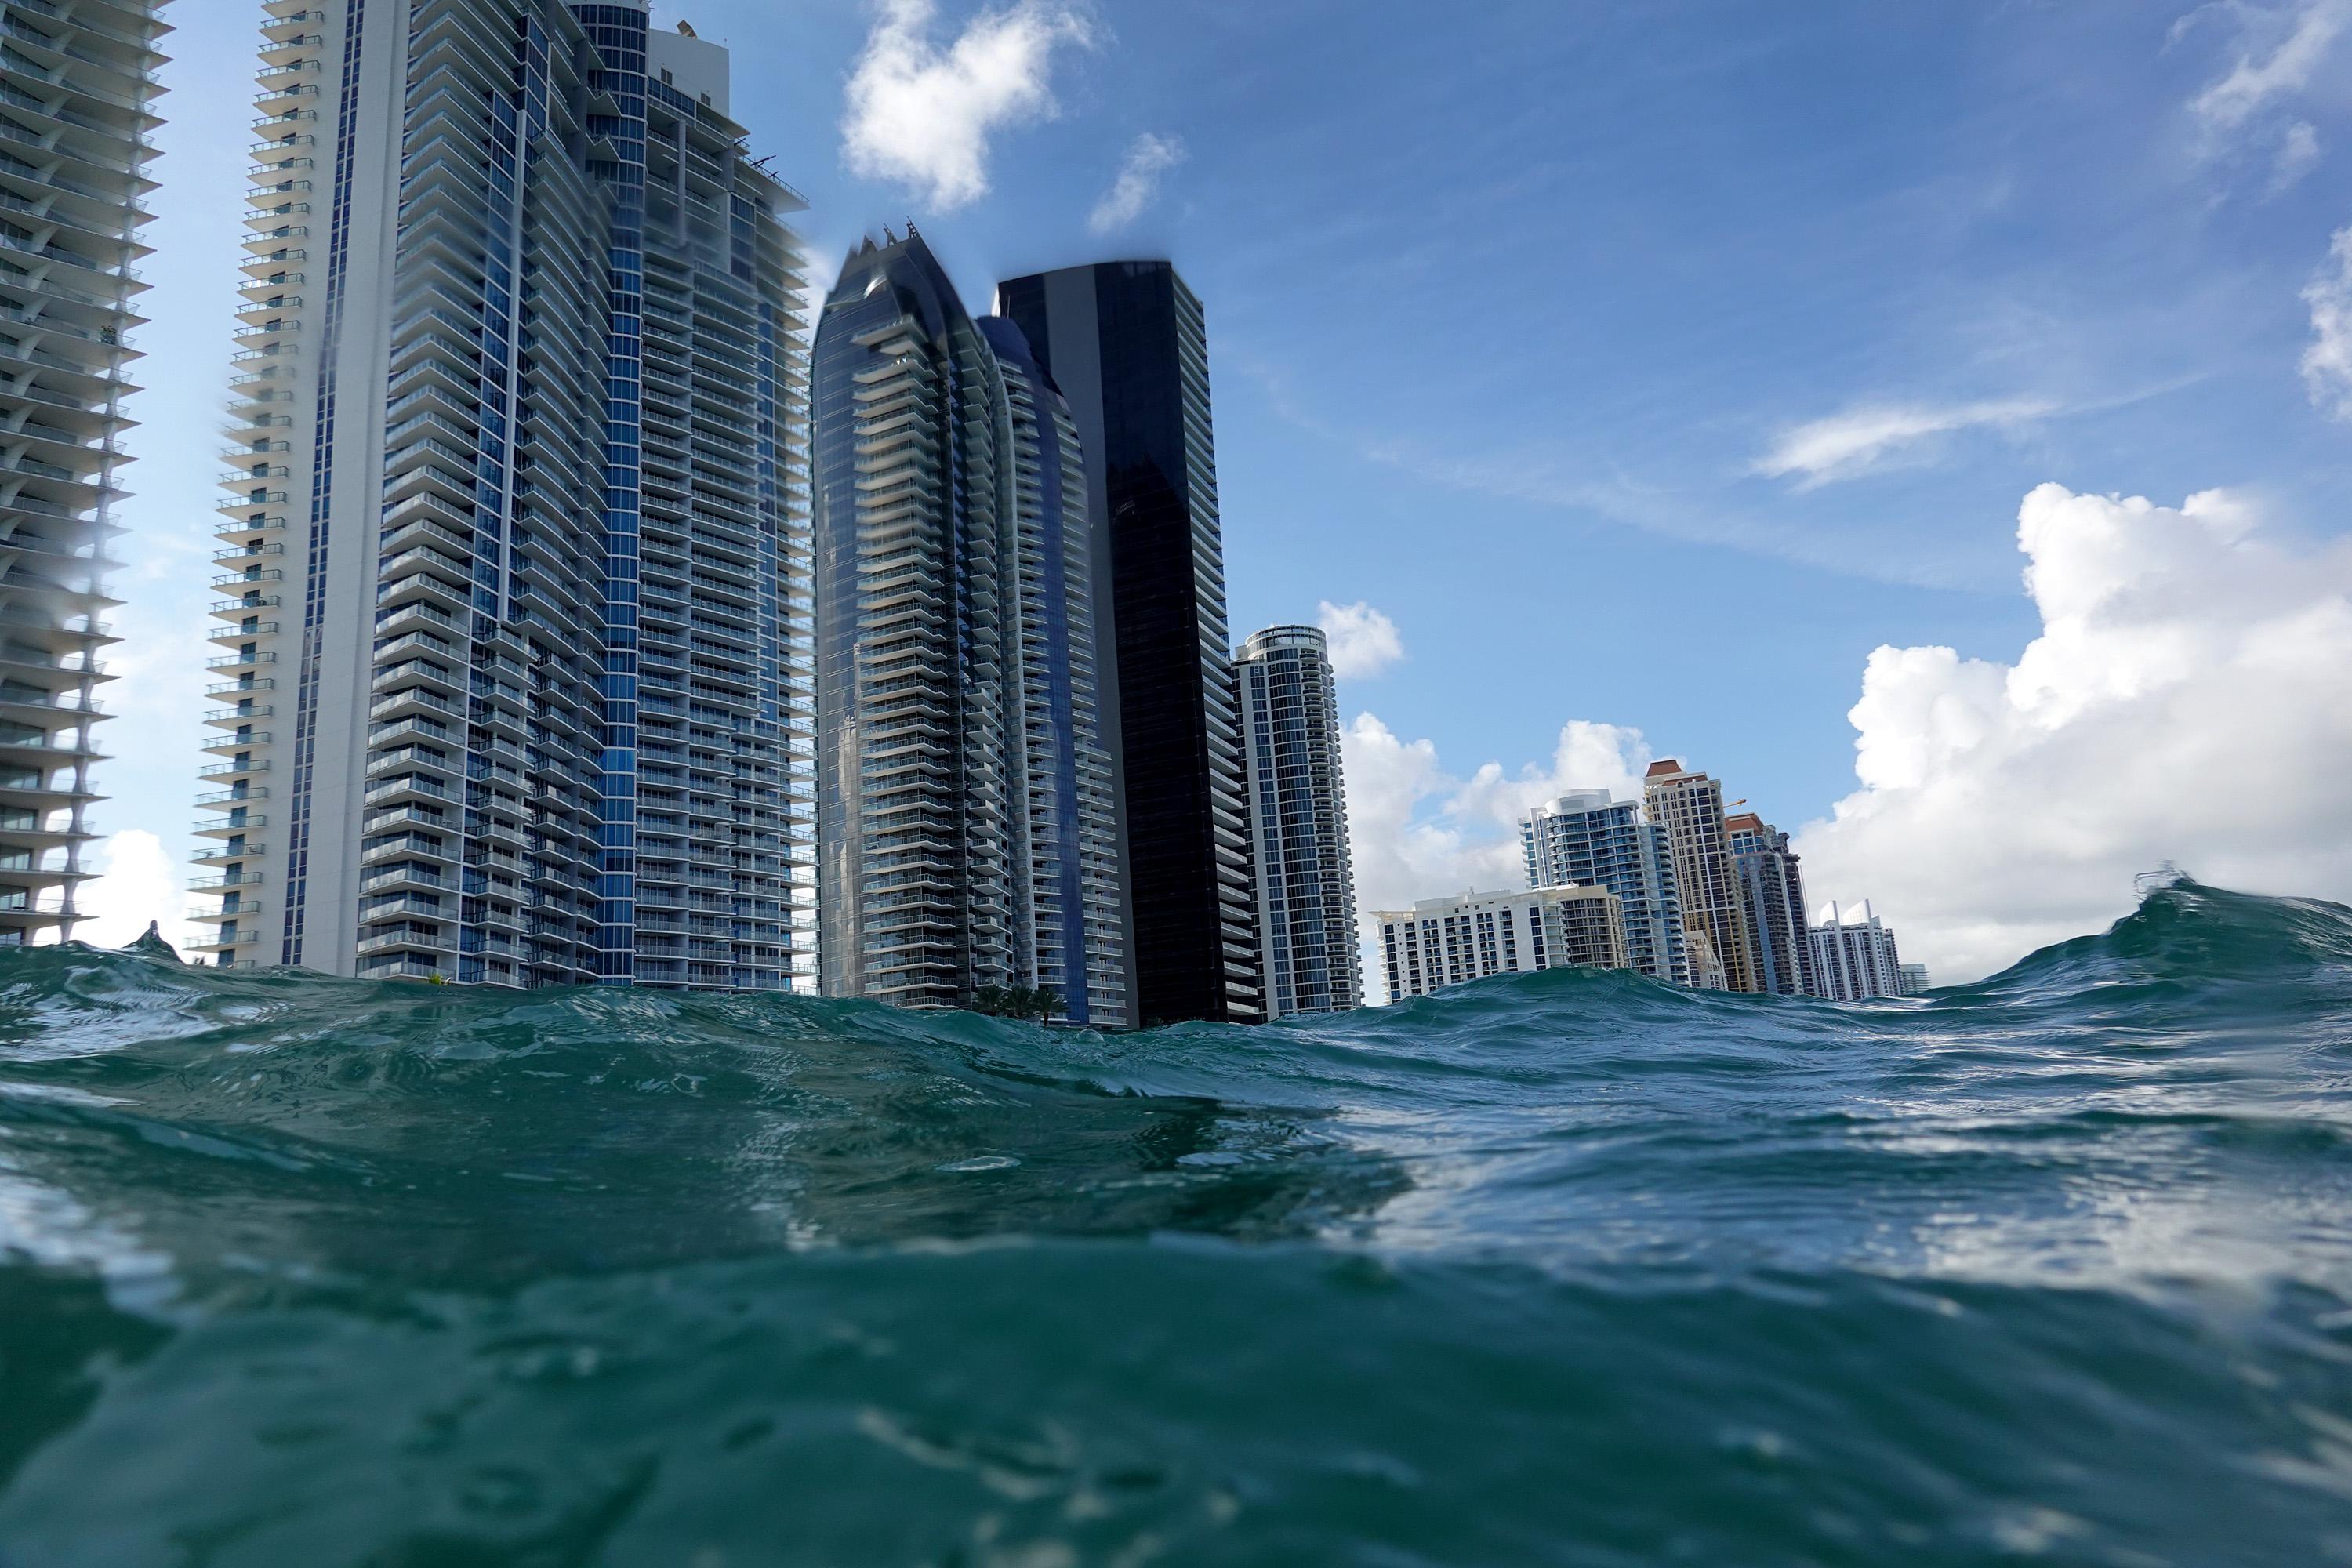 Waves lap ashore near condo buildings in Florida.